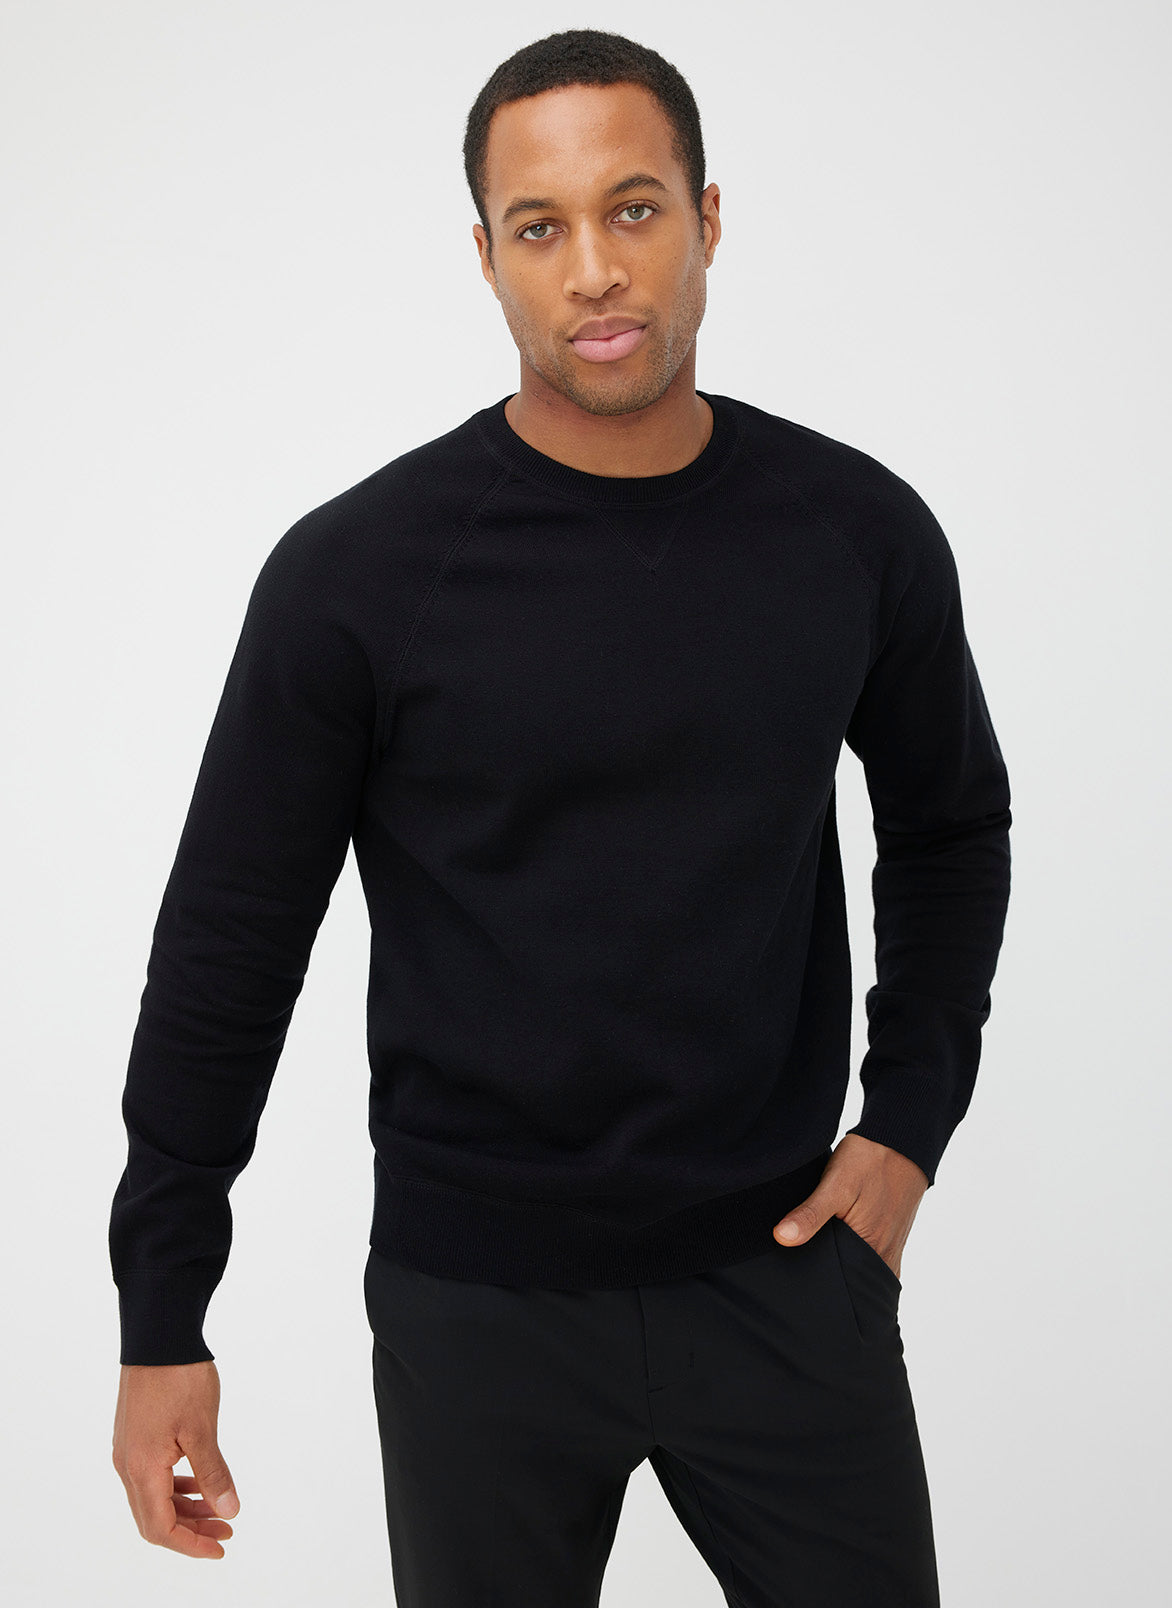 Urban Raglan Sweater ?? | M || Black